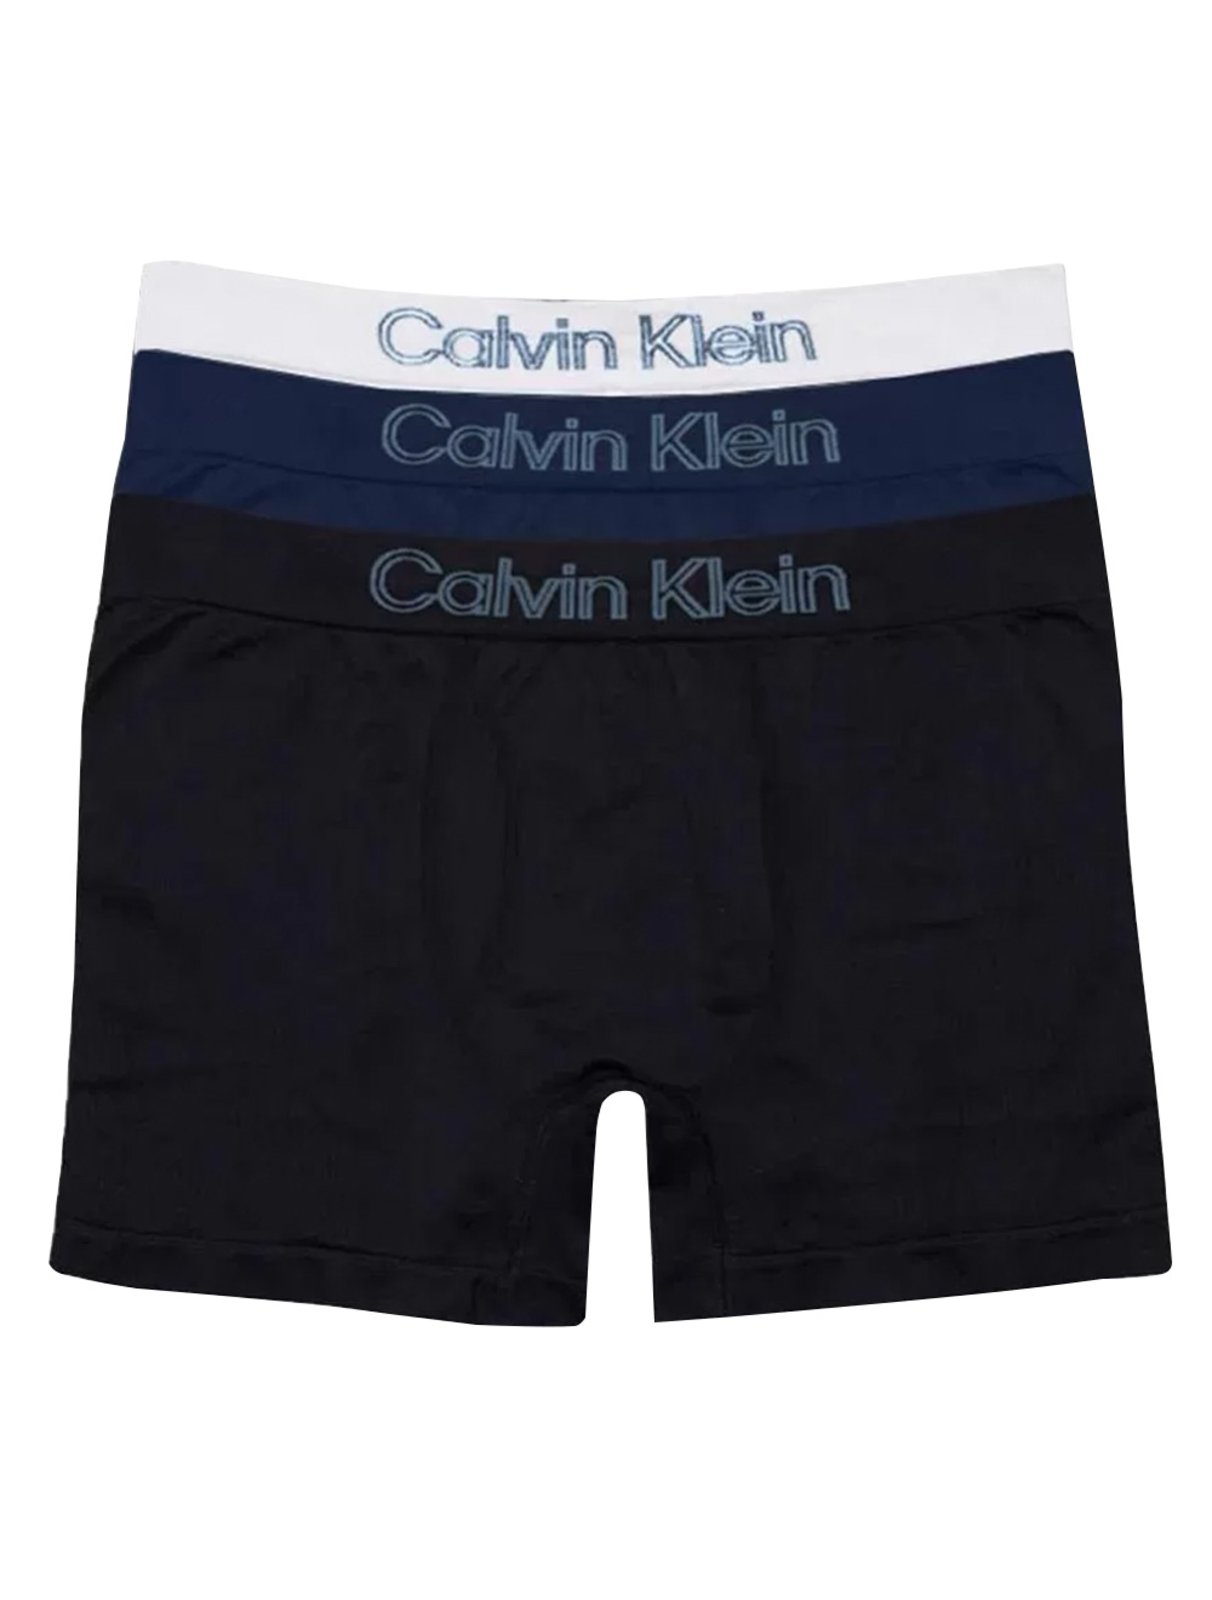 Kit 3 Cuecas Calvin Klein Low Rise Trunk Branca Branco